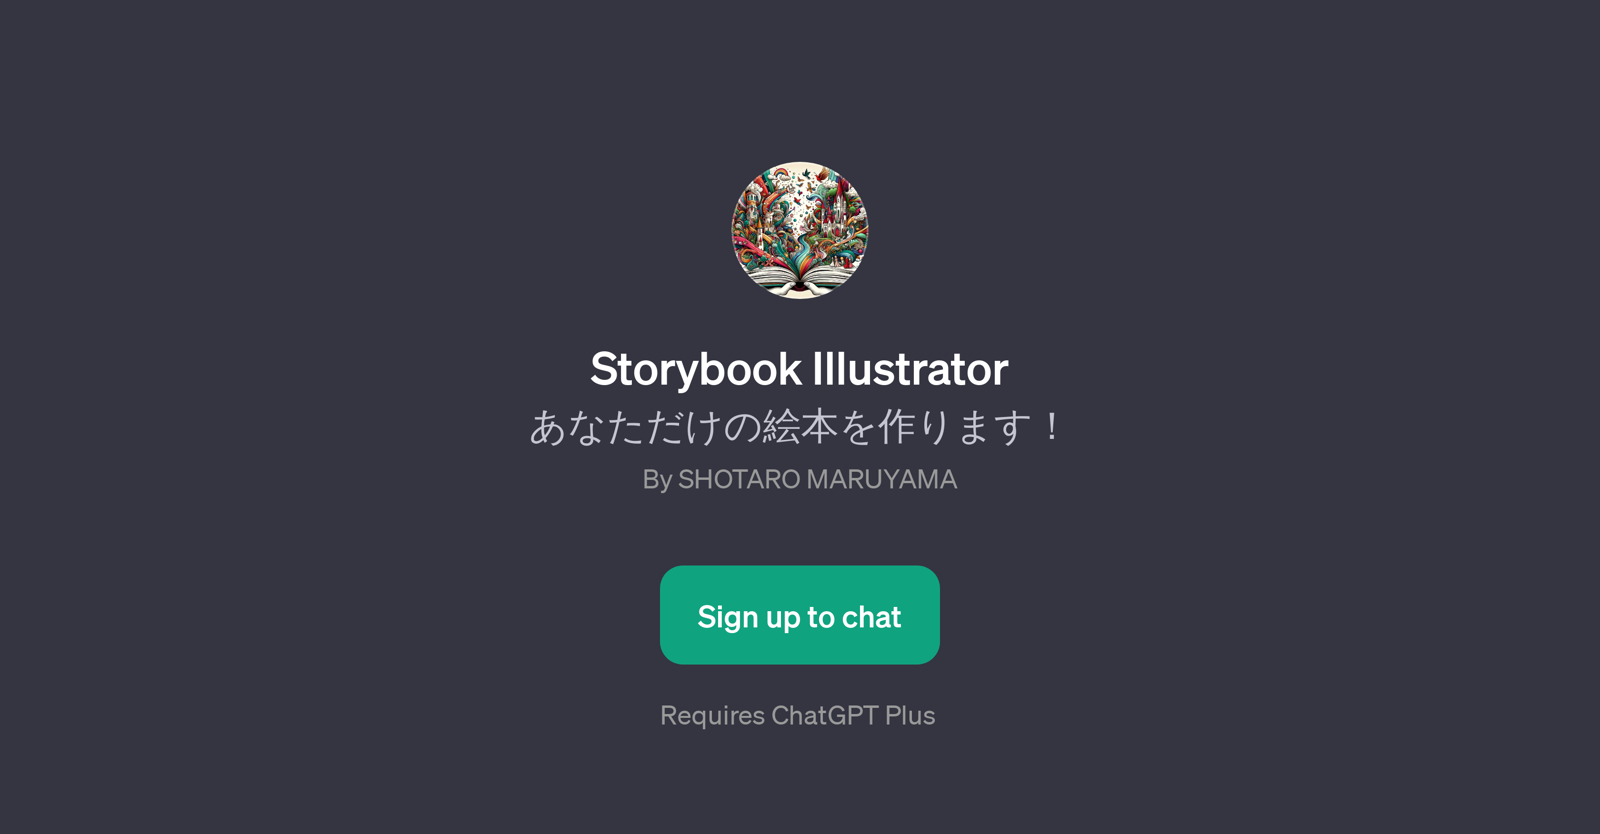 Storybook Illustrator website